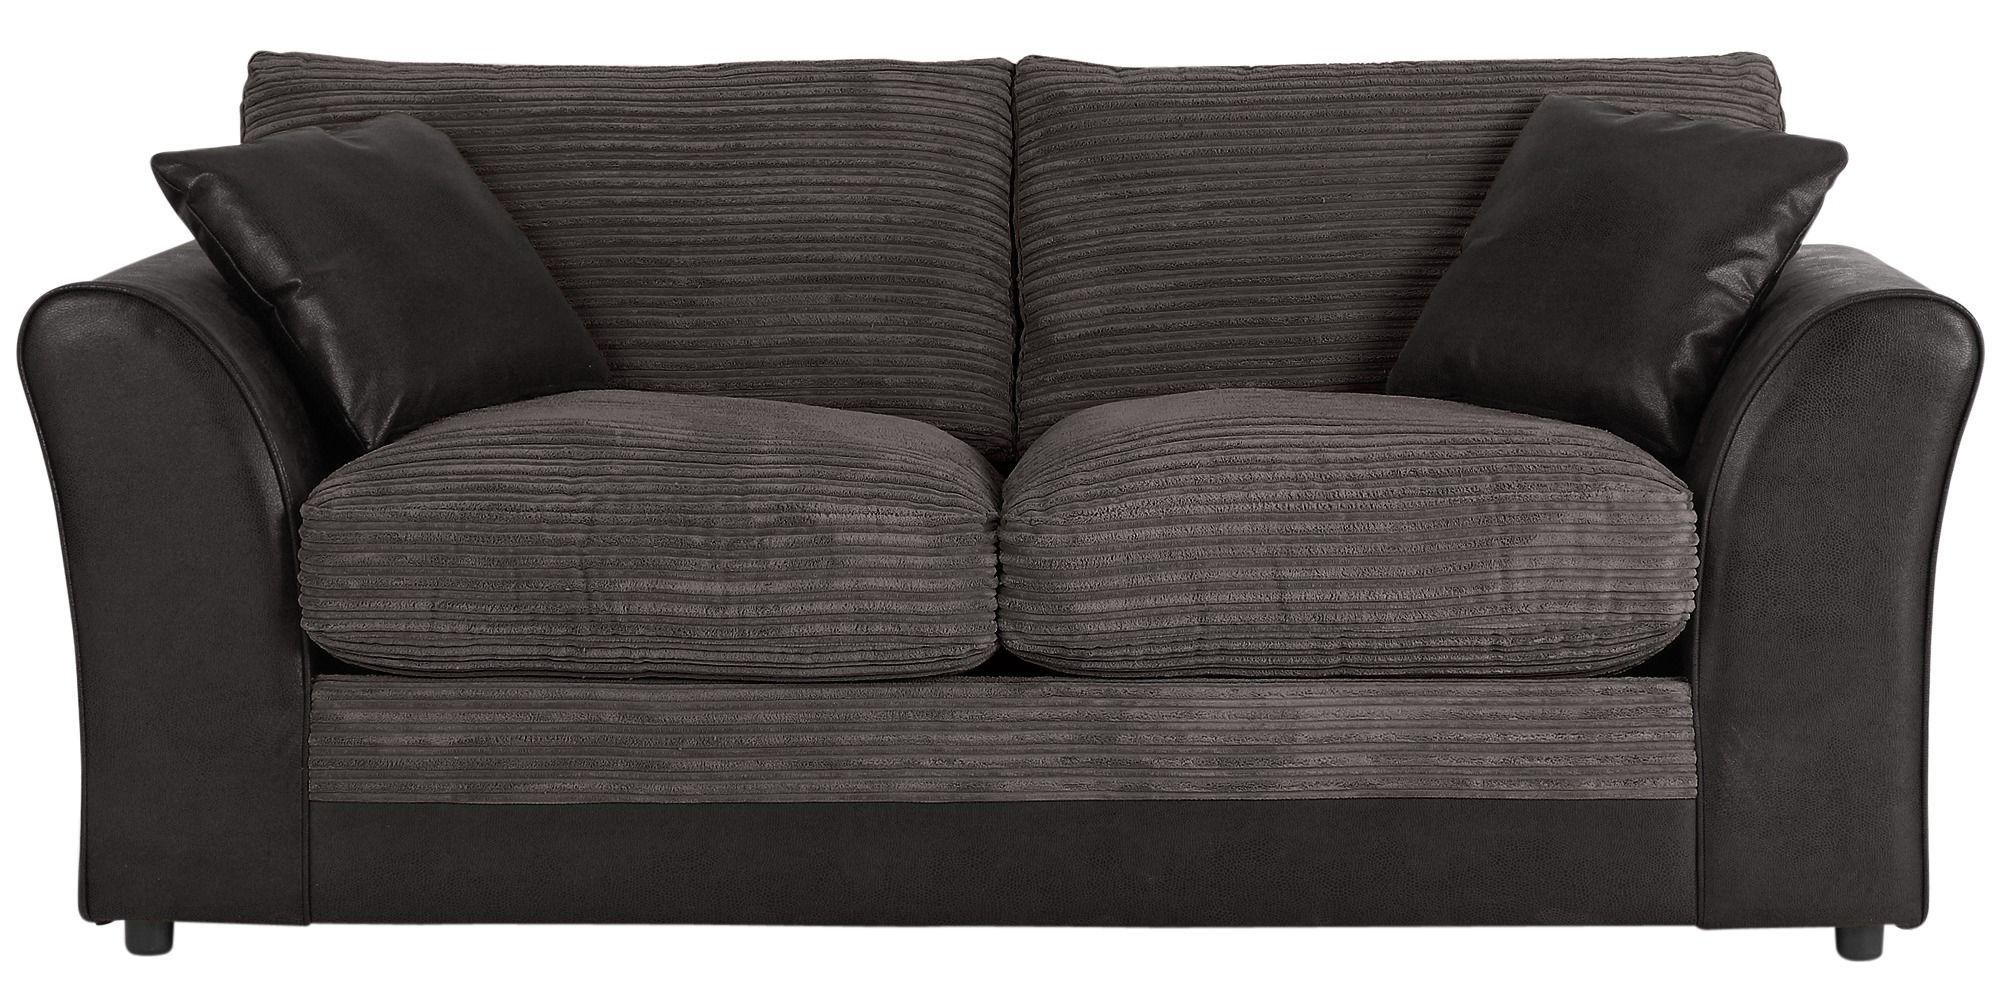 funk 2 seater fabric sofa bed